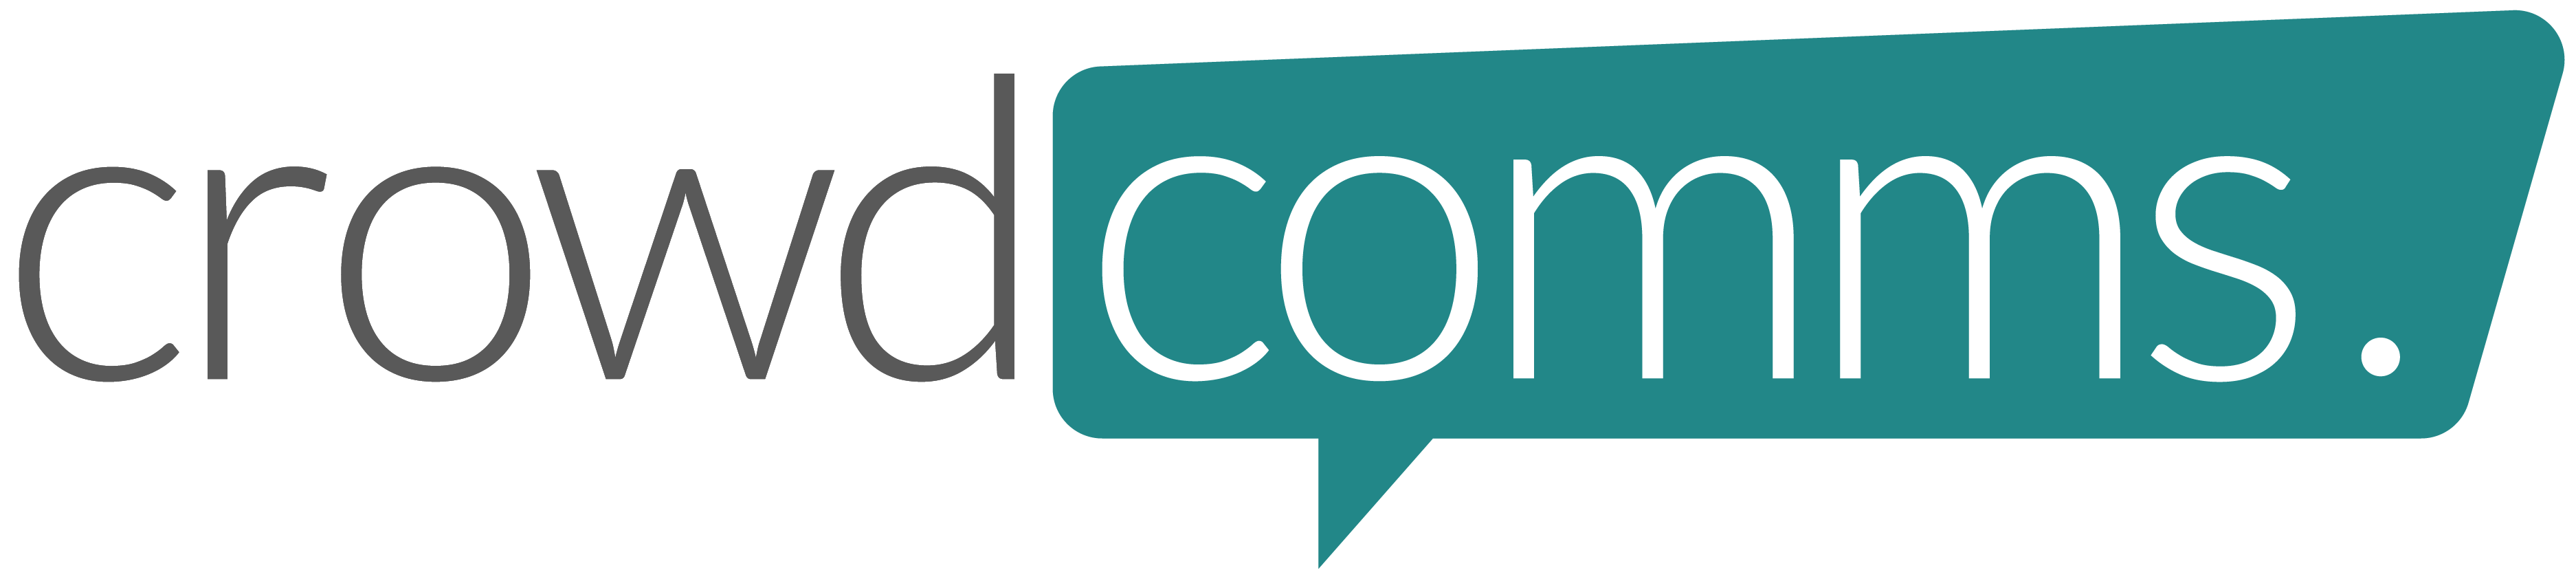 CrowdComms-Logo-MAIN.png